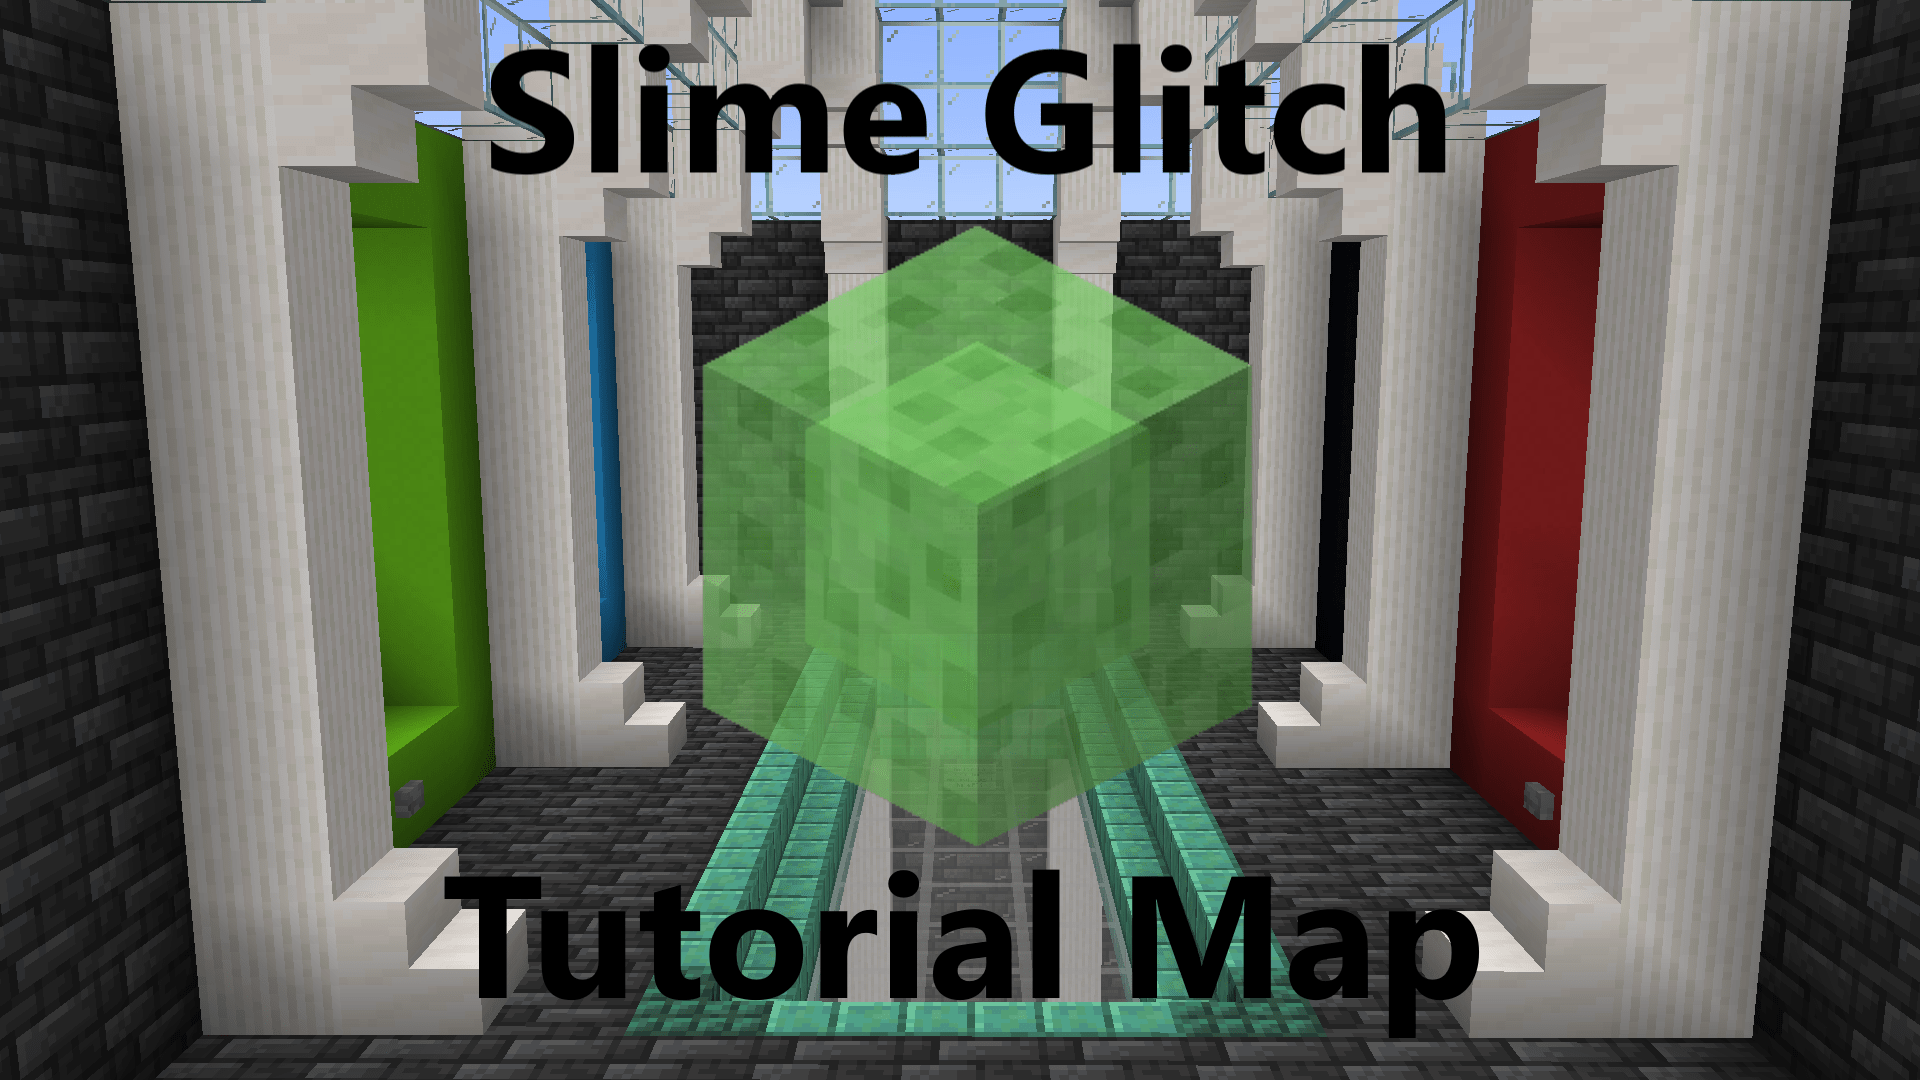 Скачать Slime Glitch Tutorial Map 1.0 для Minecraft 1.18.2